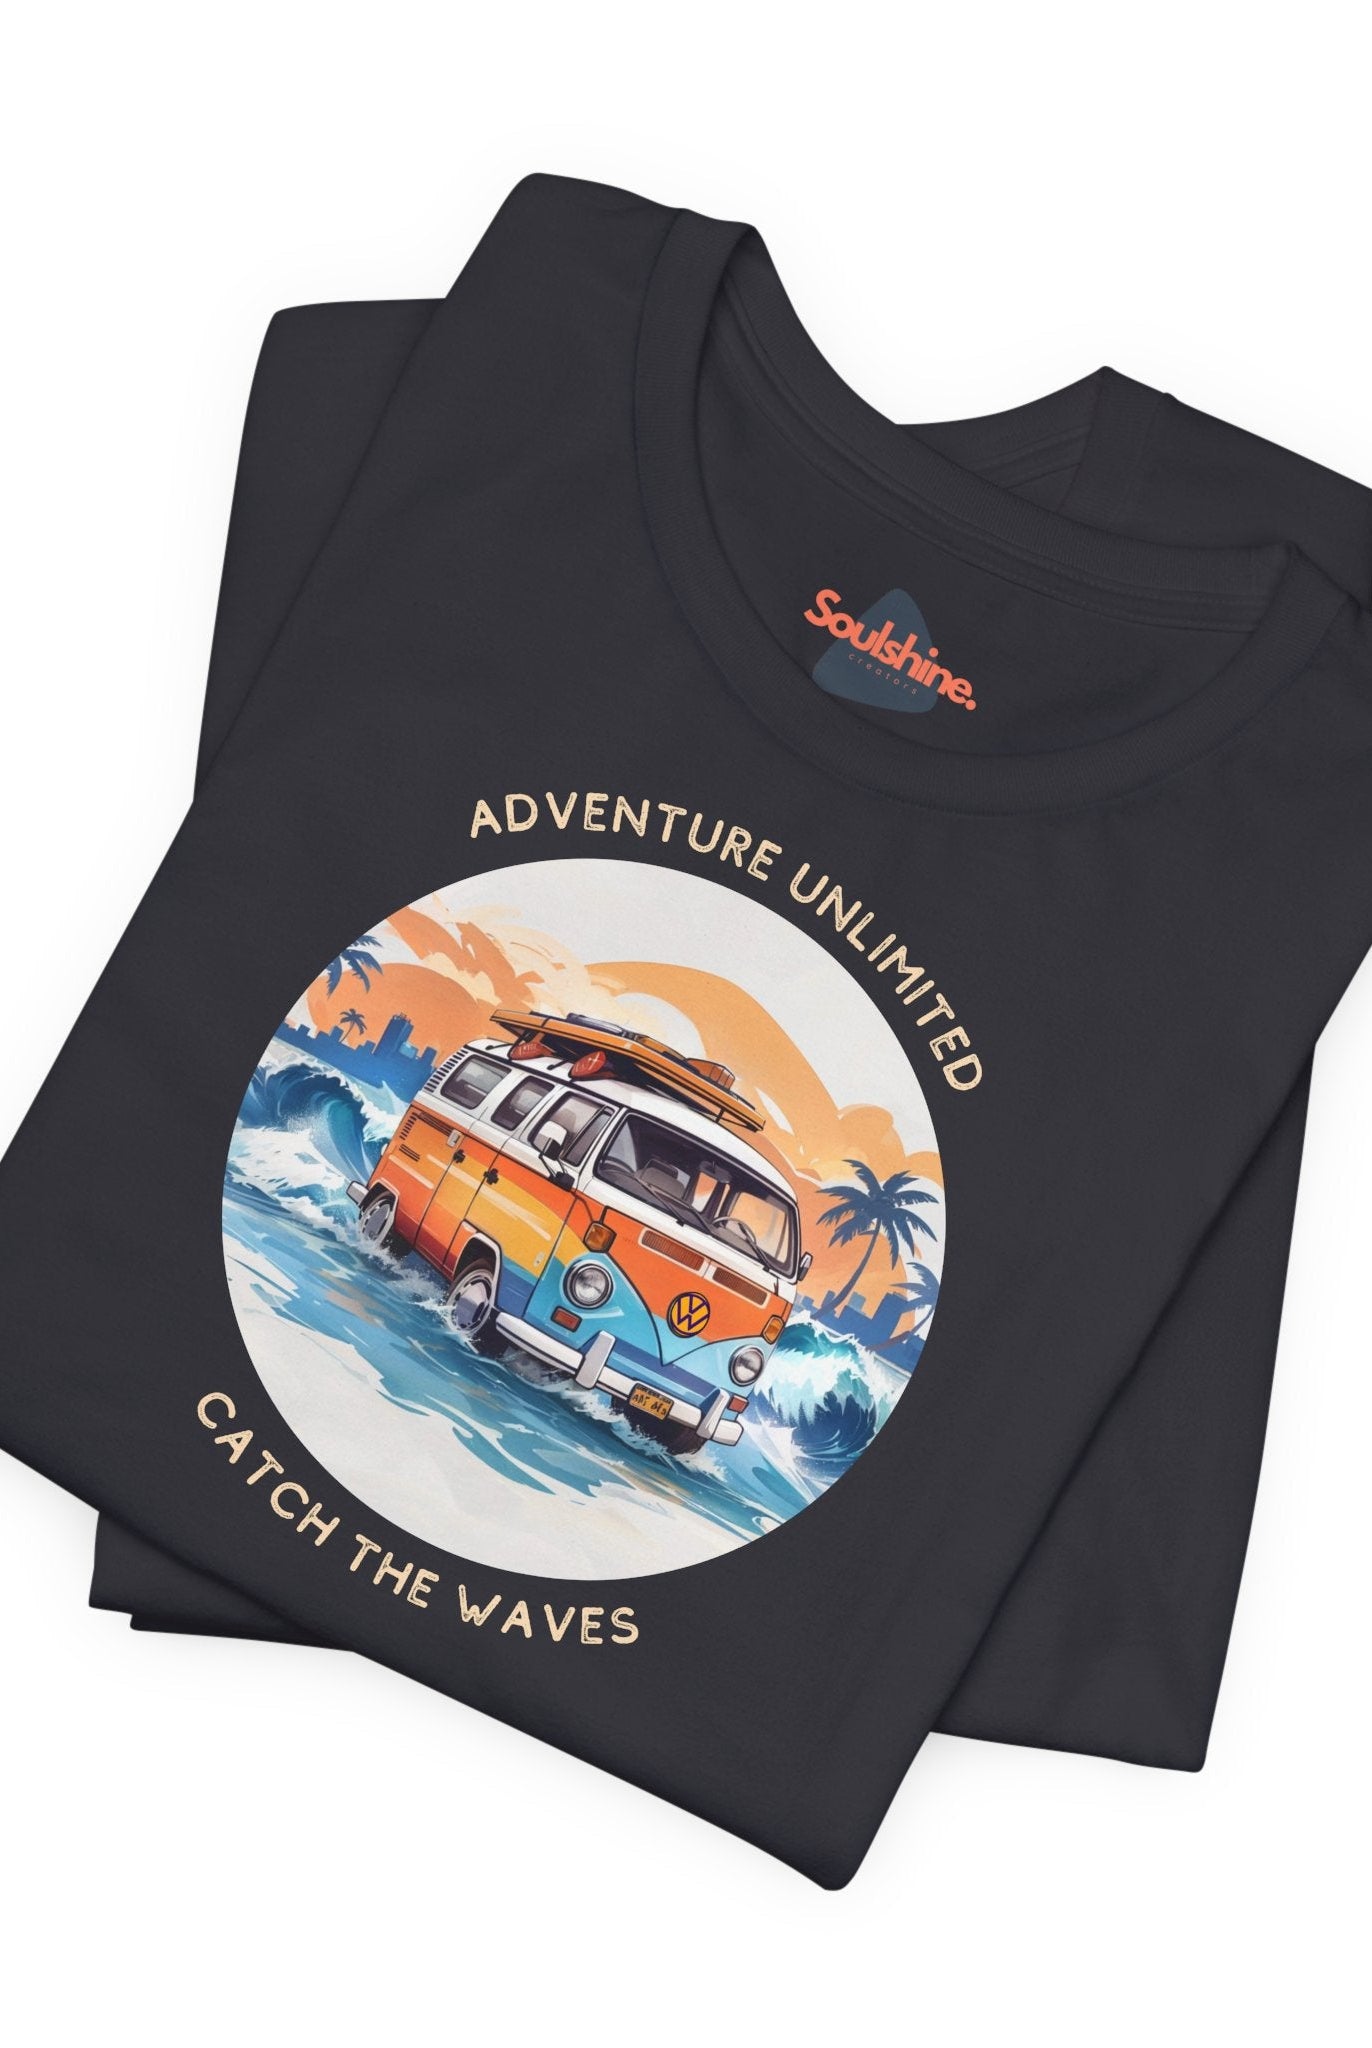 Adventure Unlimited Surfing T-Shirt printed on black Bella & Canvas EU item